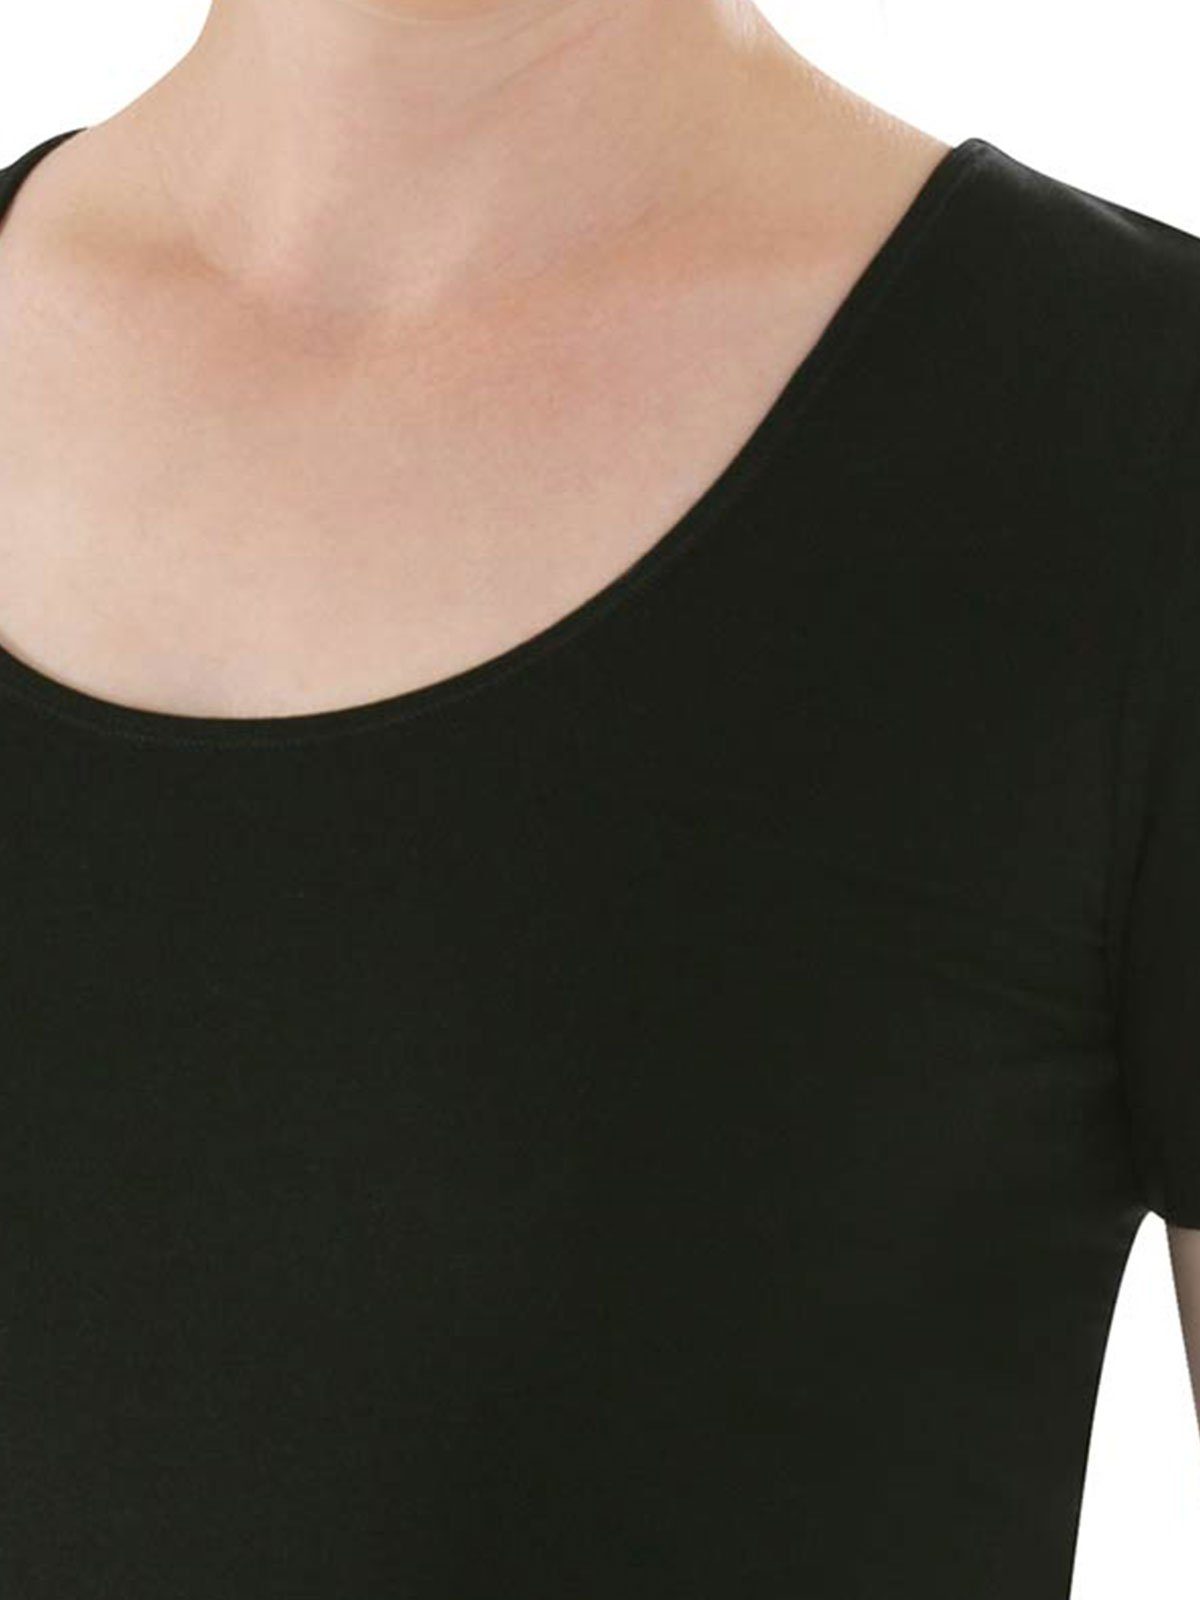 COMAZO Unterhemd 6er Pack Baumwoll schwarz Vegan Damen Unterhemd Shirt (Packung, 6-St)